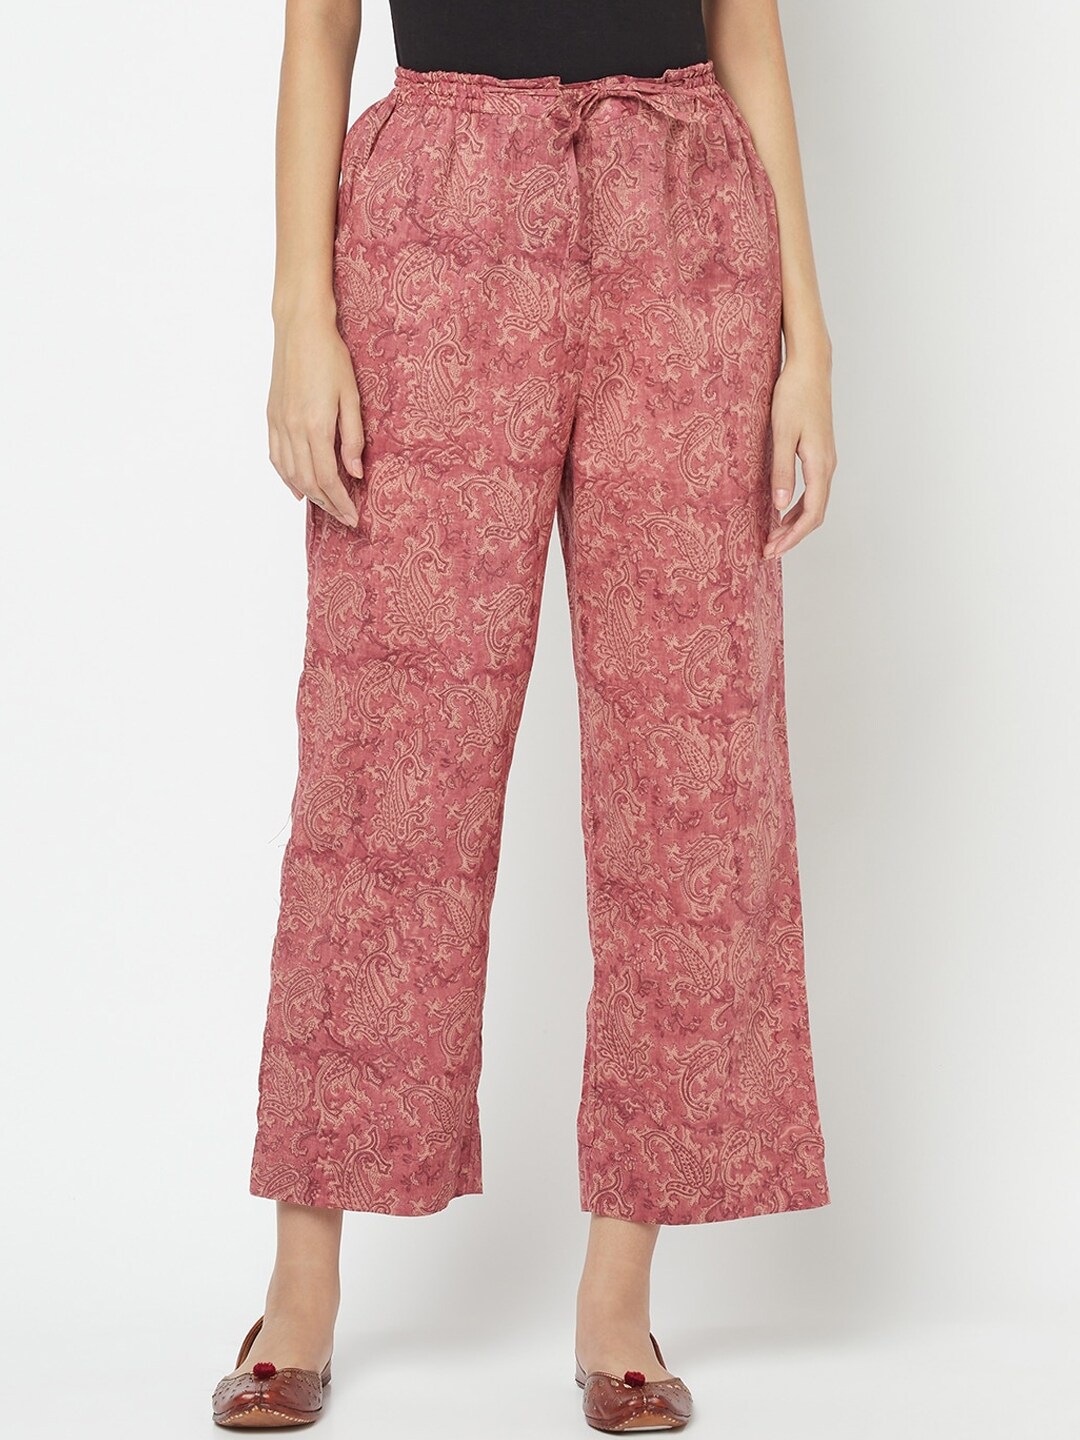 Fabindia Women Pink Ethnic Motifs Printed Trousers Price in India